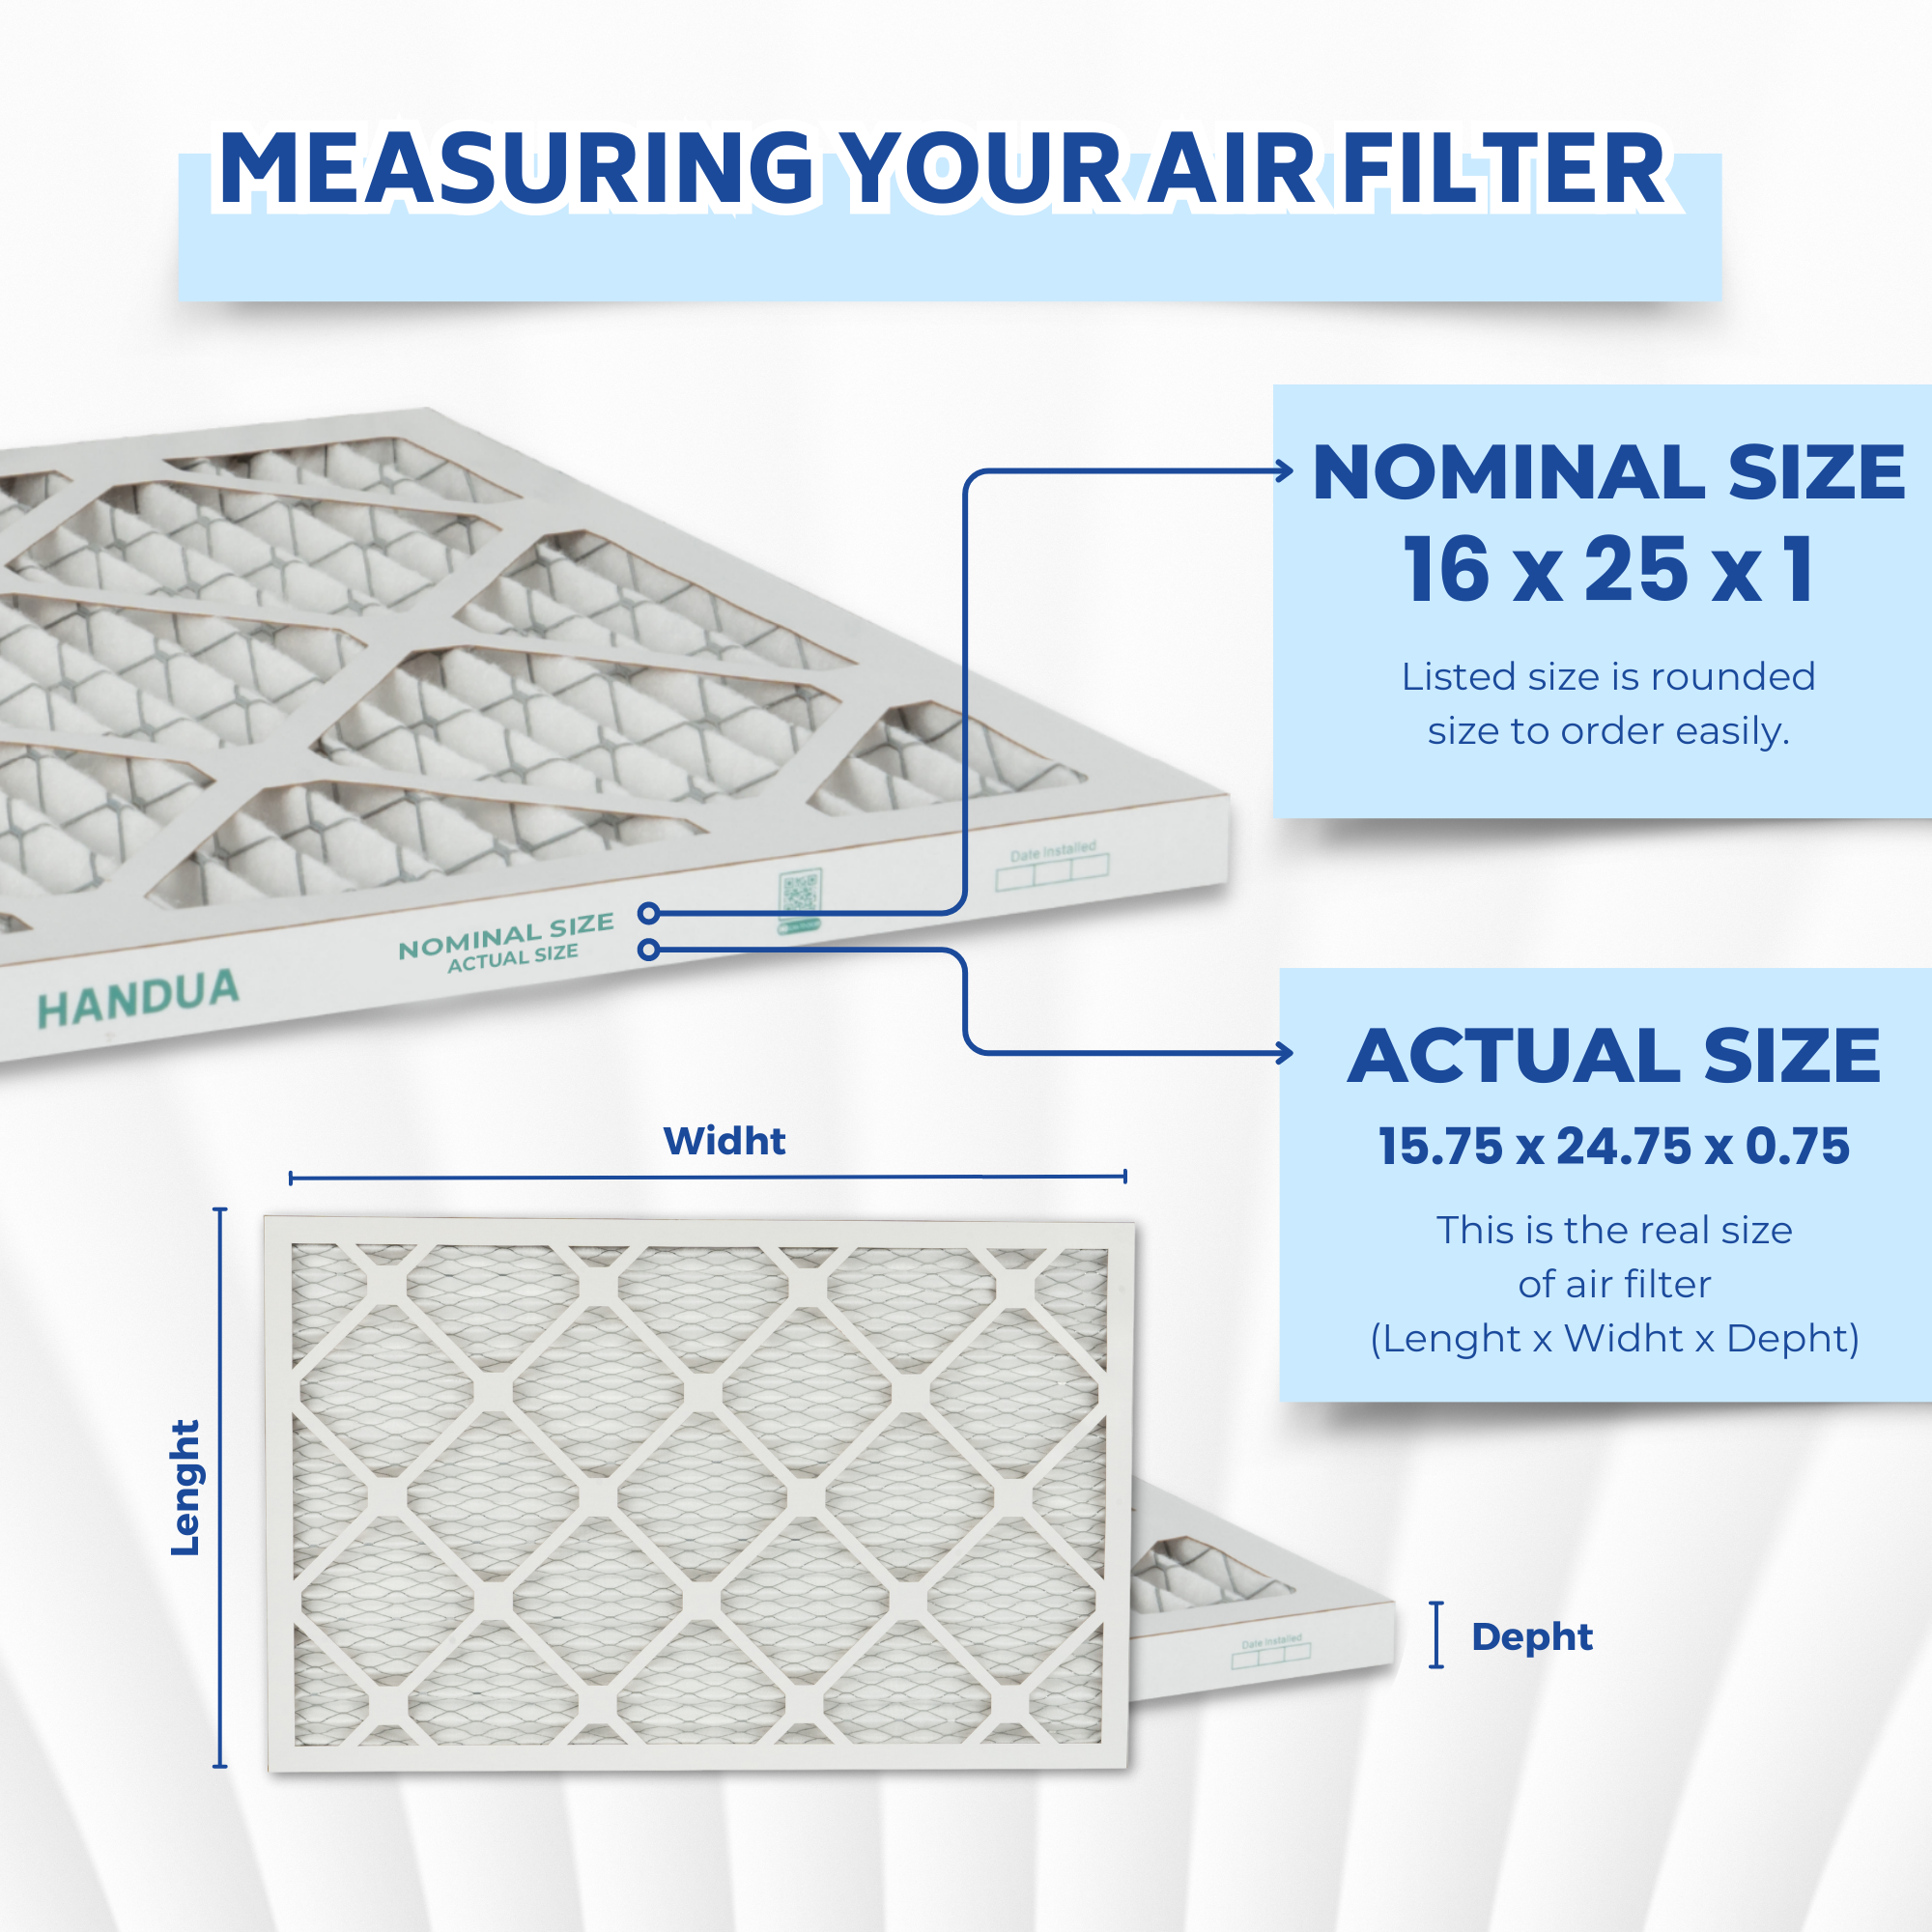 Handua 16x25x1 Air Filter MERV 8 Dust Control, Plated Furnace AC Air Replacement Filter, 4 Pack (Actual Size: 15.75" x 24.75" x 0.75")